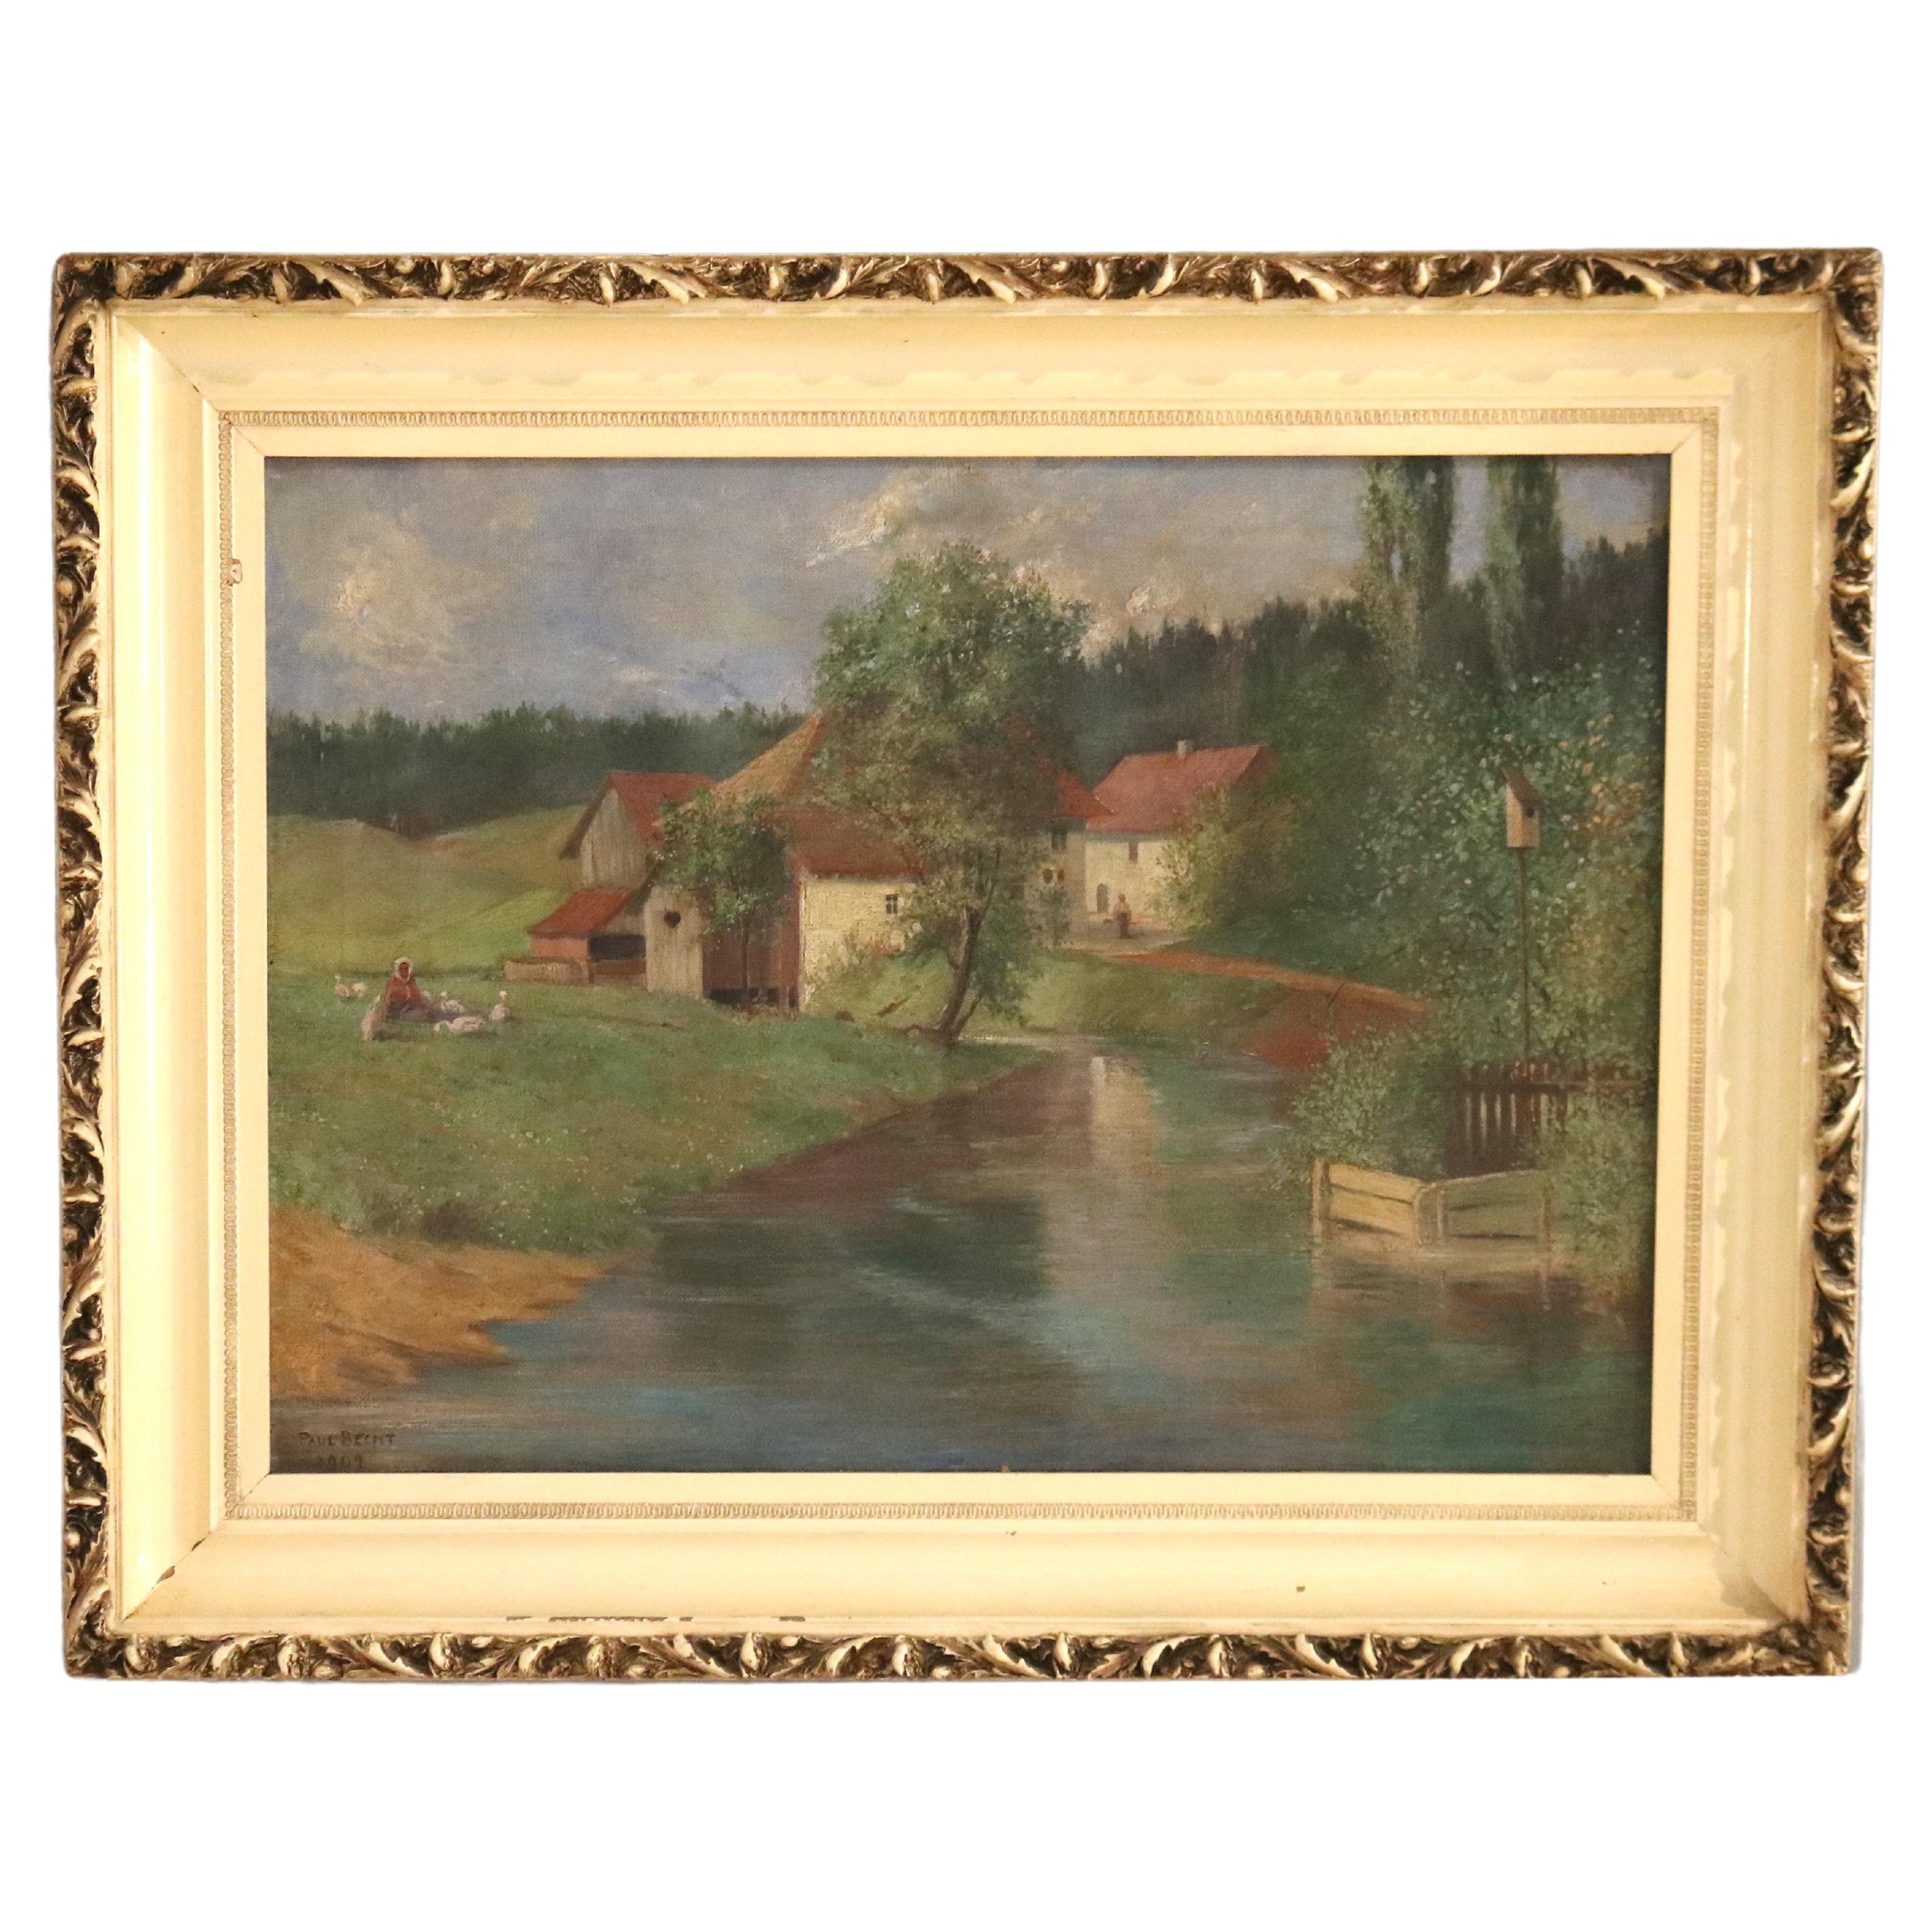 Antique Oil on Canvas Landscape Painting, Farm Scene, Signed Brecht, 1907 For Sale